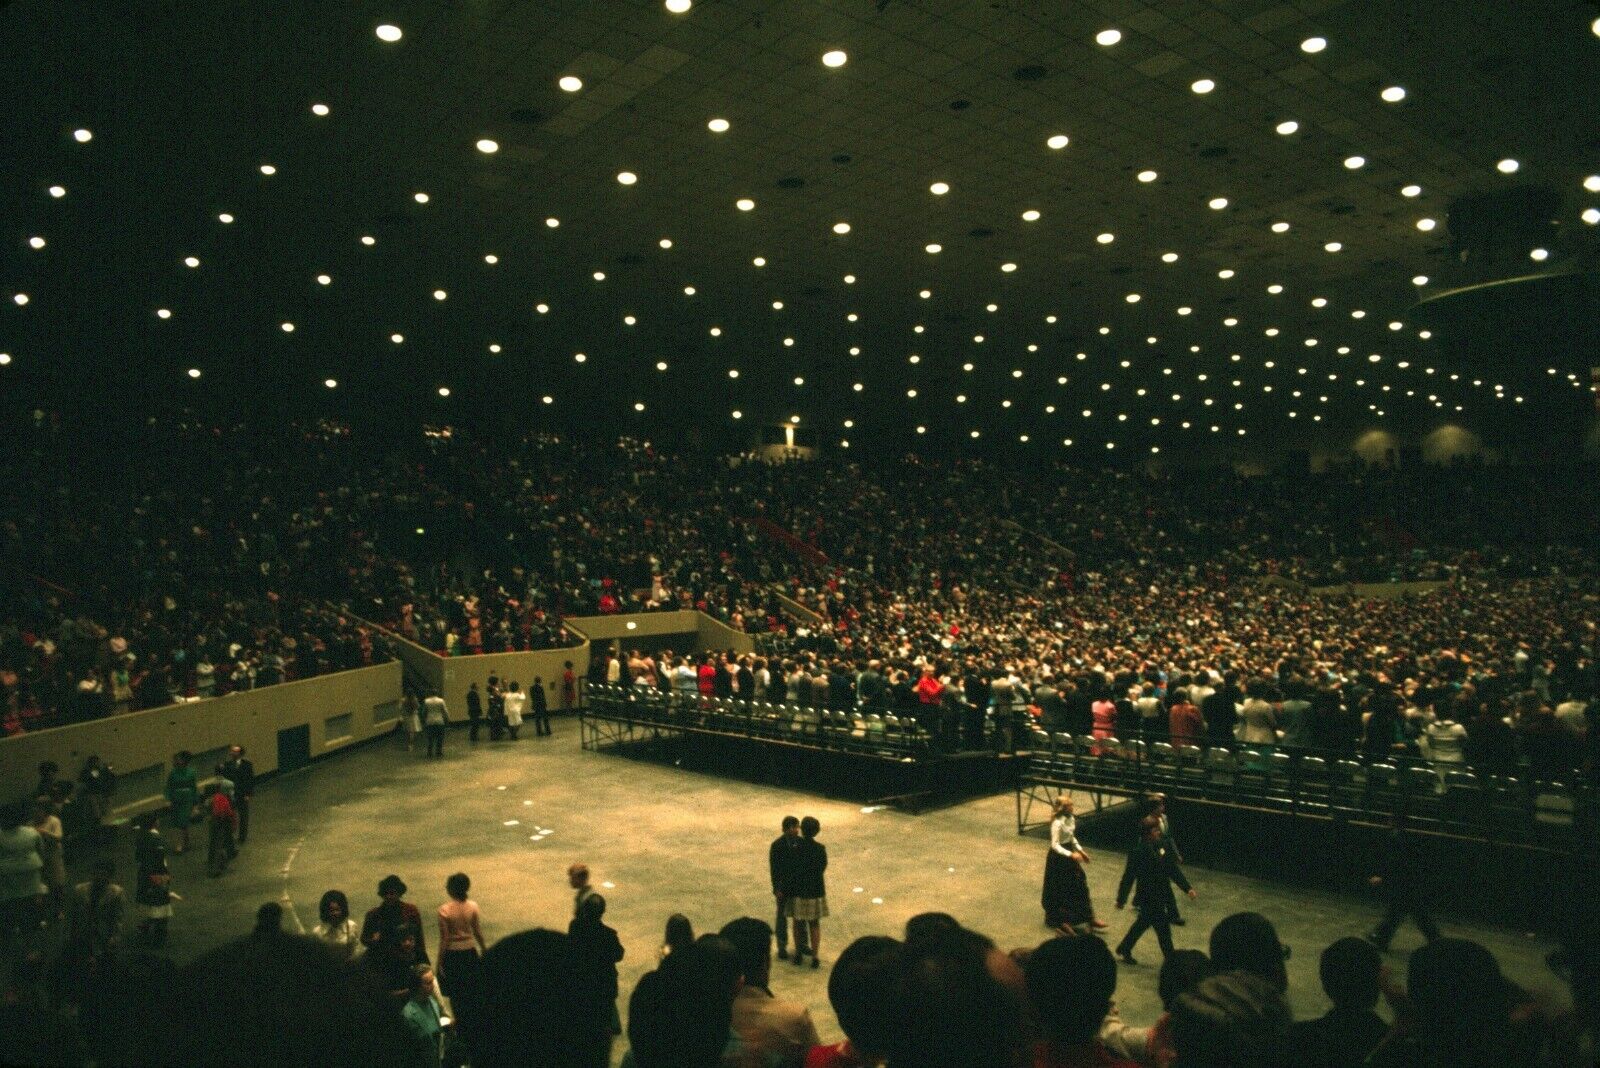 1974 Crowd Audience Sitting in Basketball Gymnasium #2 70s Vintage 35mm Slide